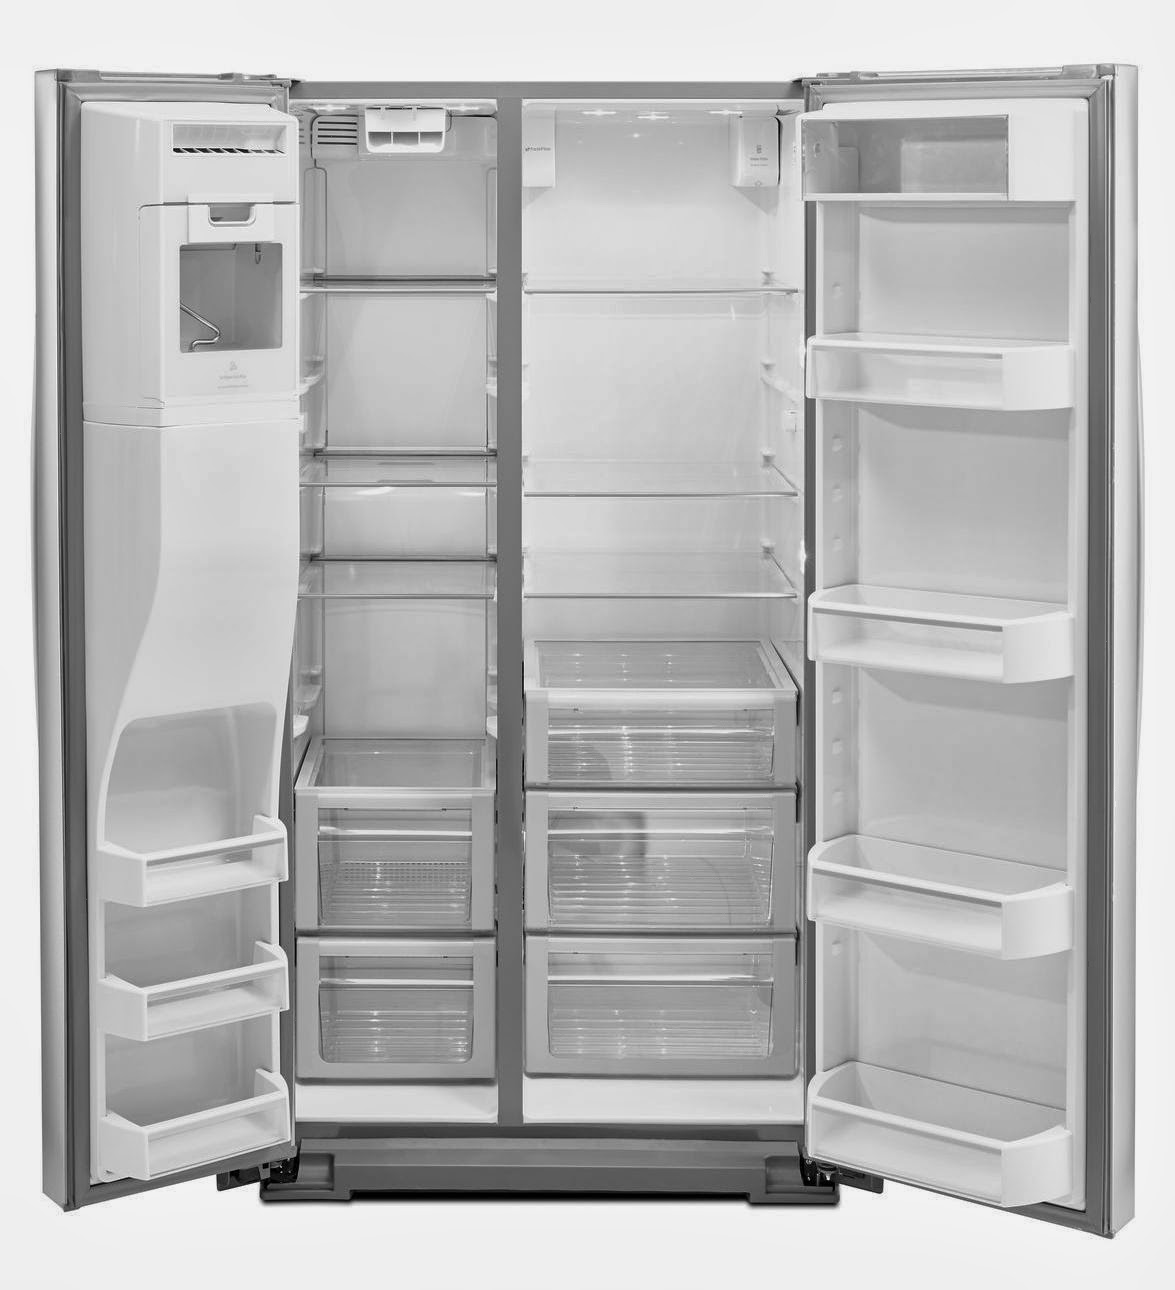 whirlpool-refrigerator-brand-wrs950siae-refrigerators